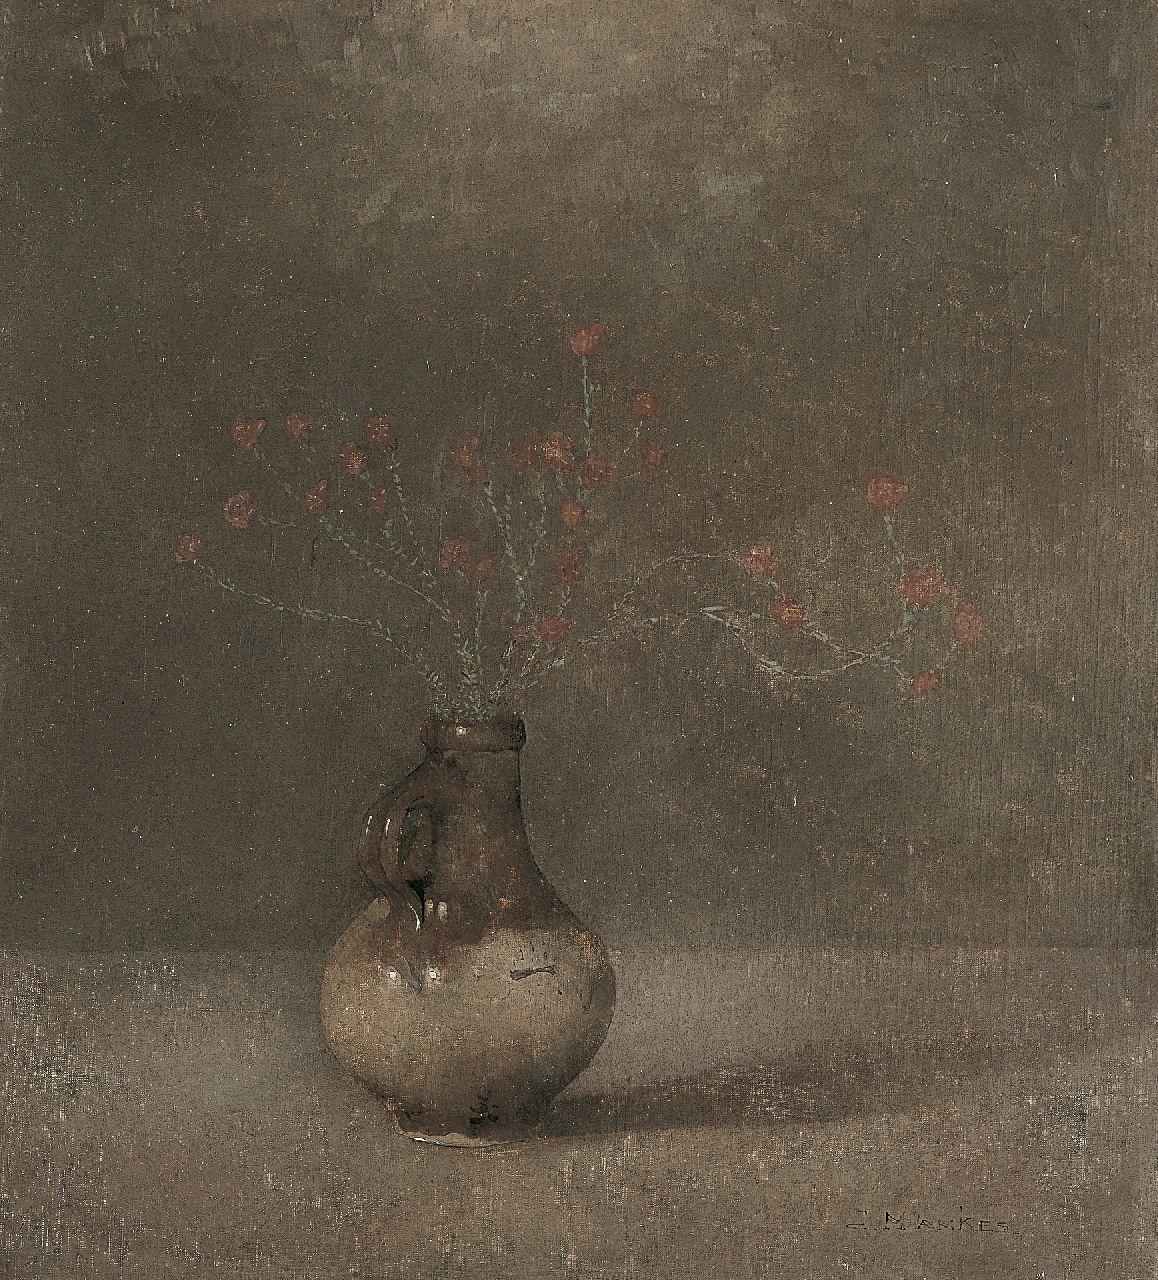 Mankes J.  | Jan Mankes, A jar with bottle heath, Öl auf Leinwand 40,5 x 36,5 cm, signed l.r. und dated 1911